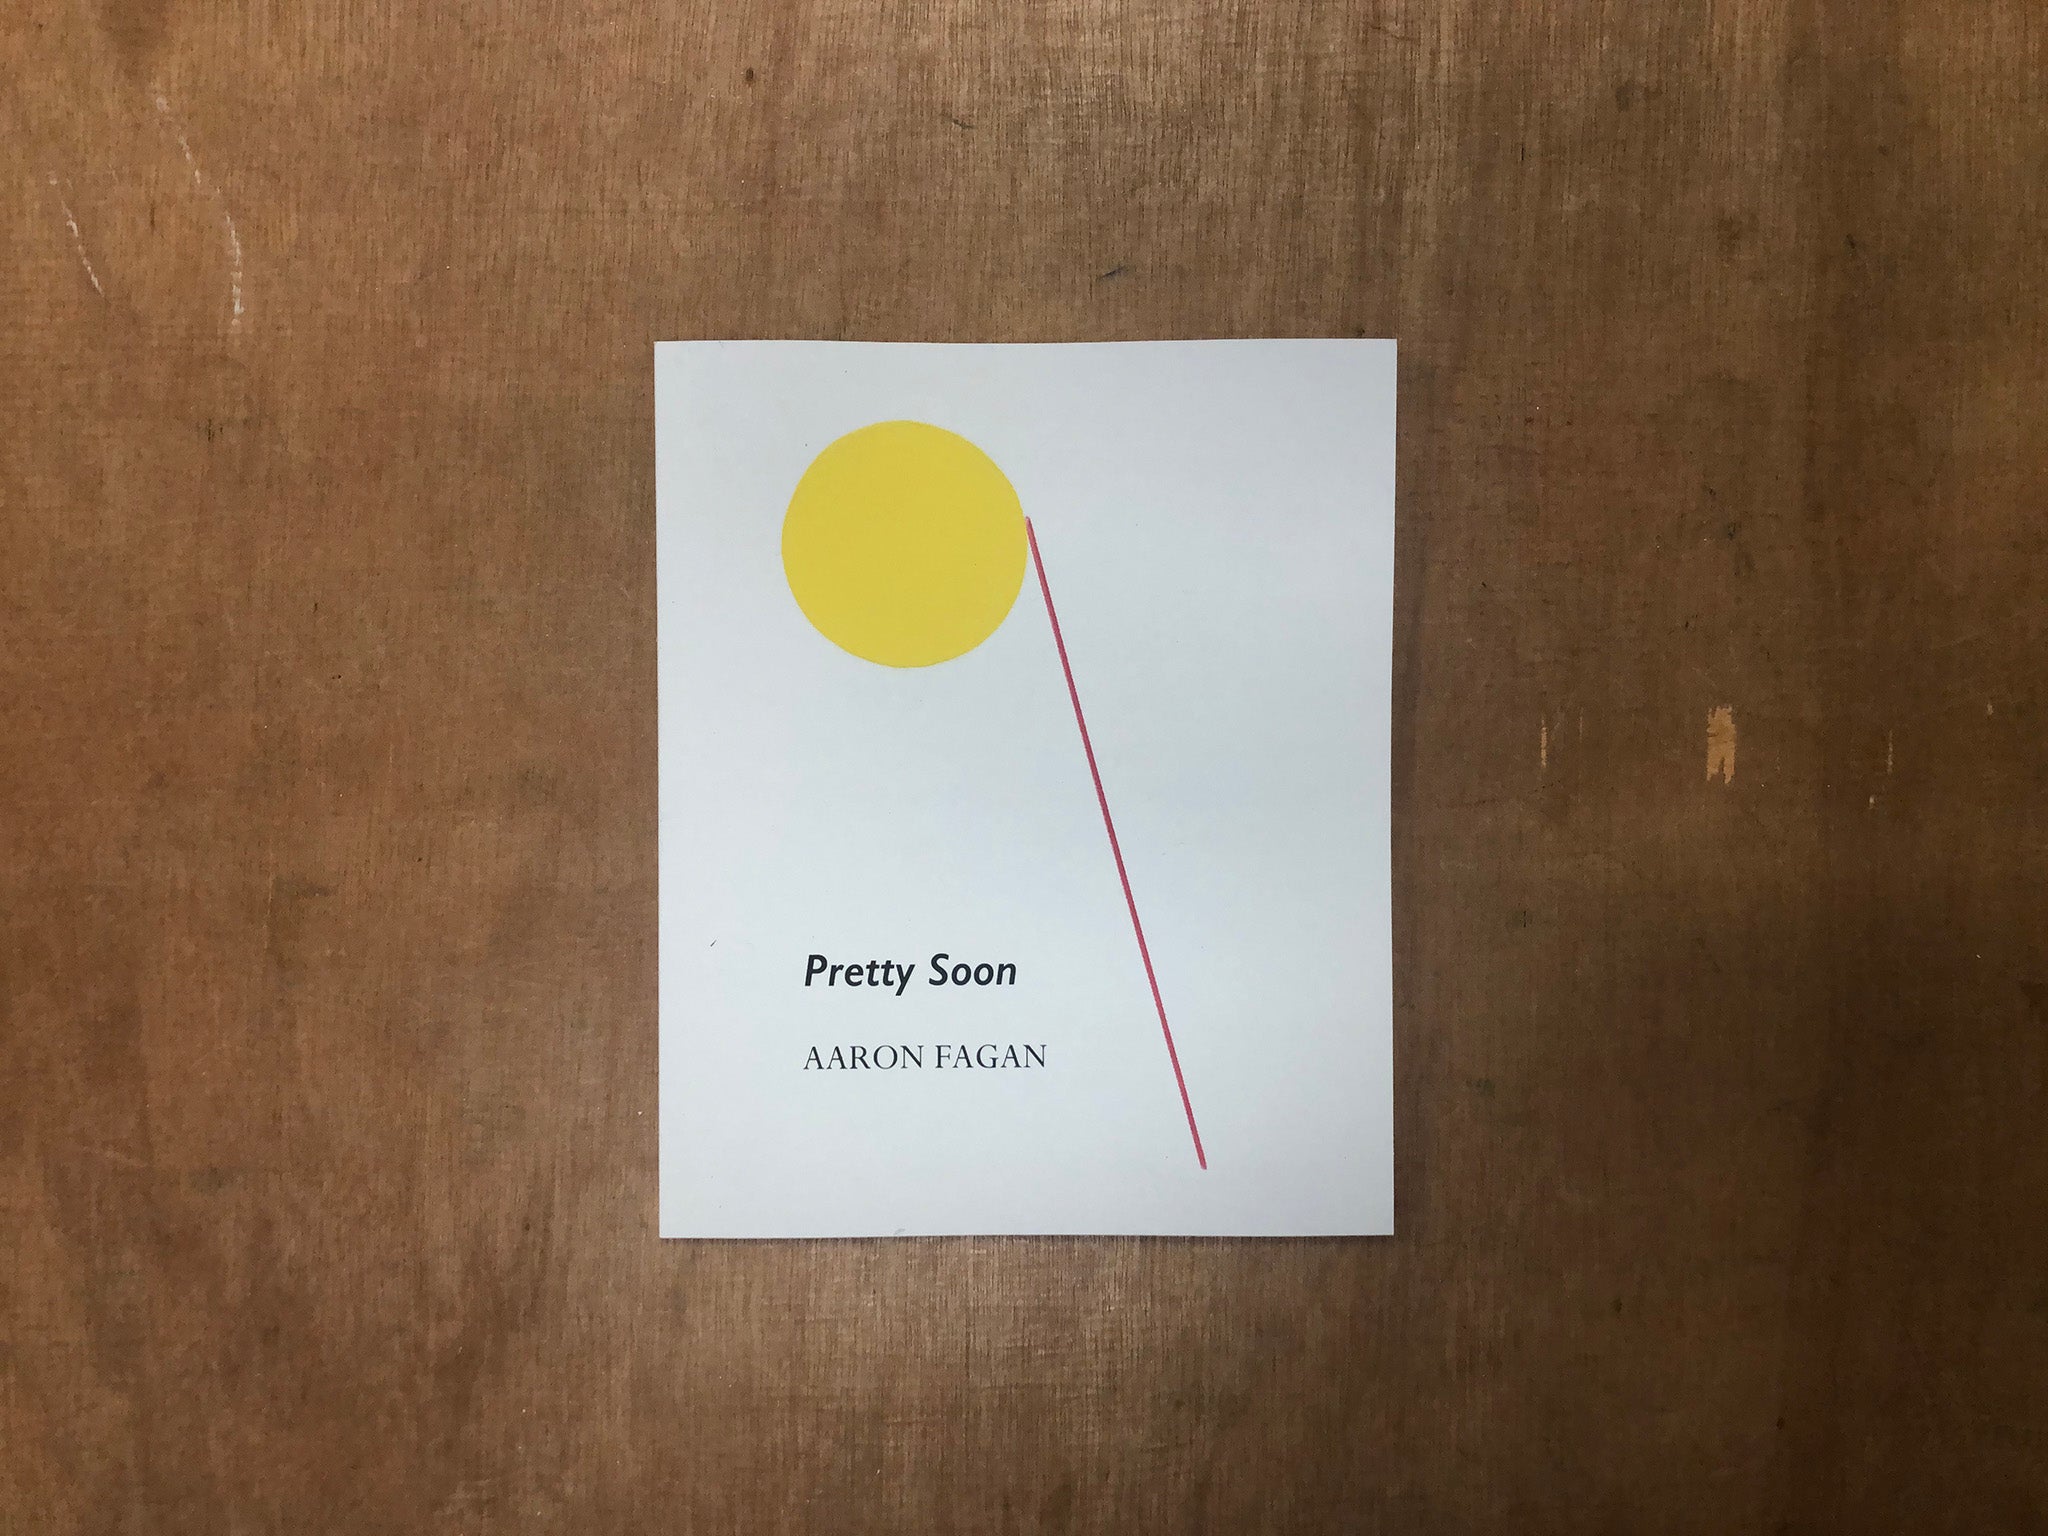 PRETTY SOON by Aaron Fagan